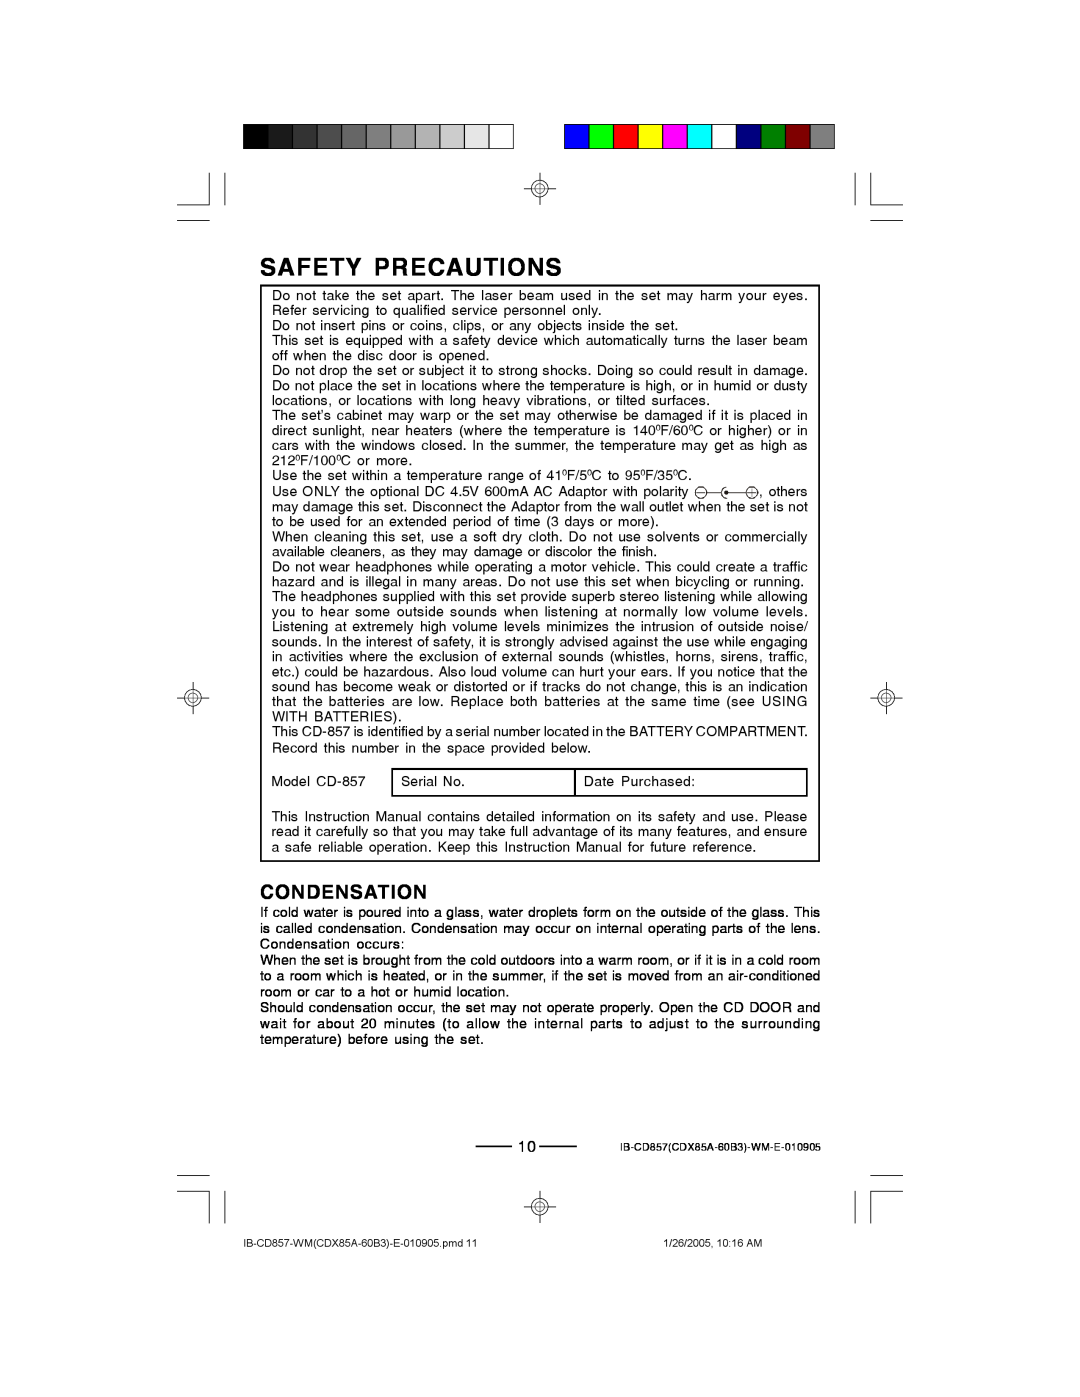 Lenoxx Electronics CD-857 manual Safety Precautions, Condensation 